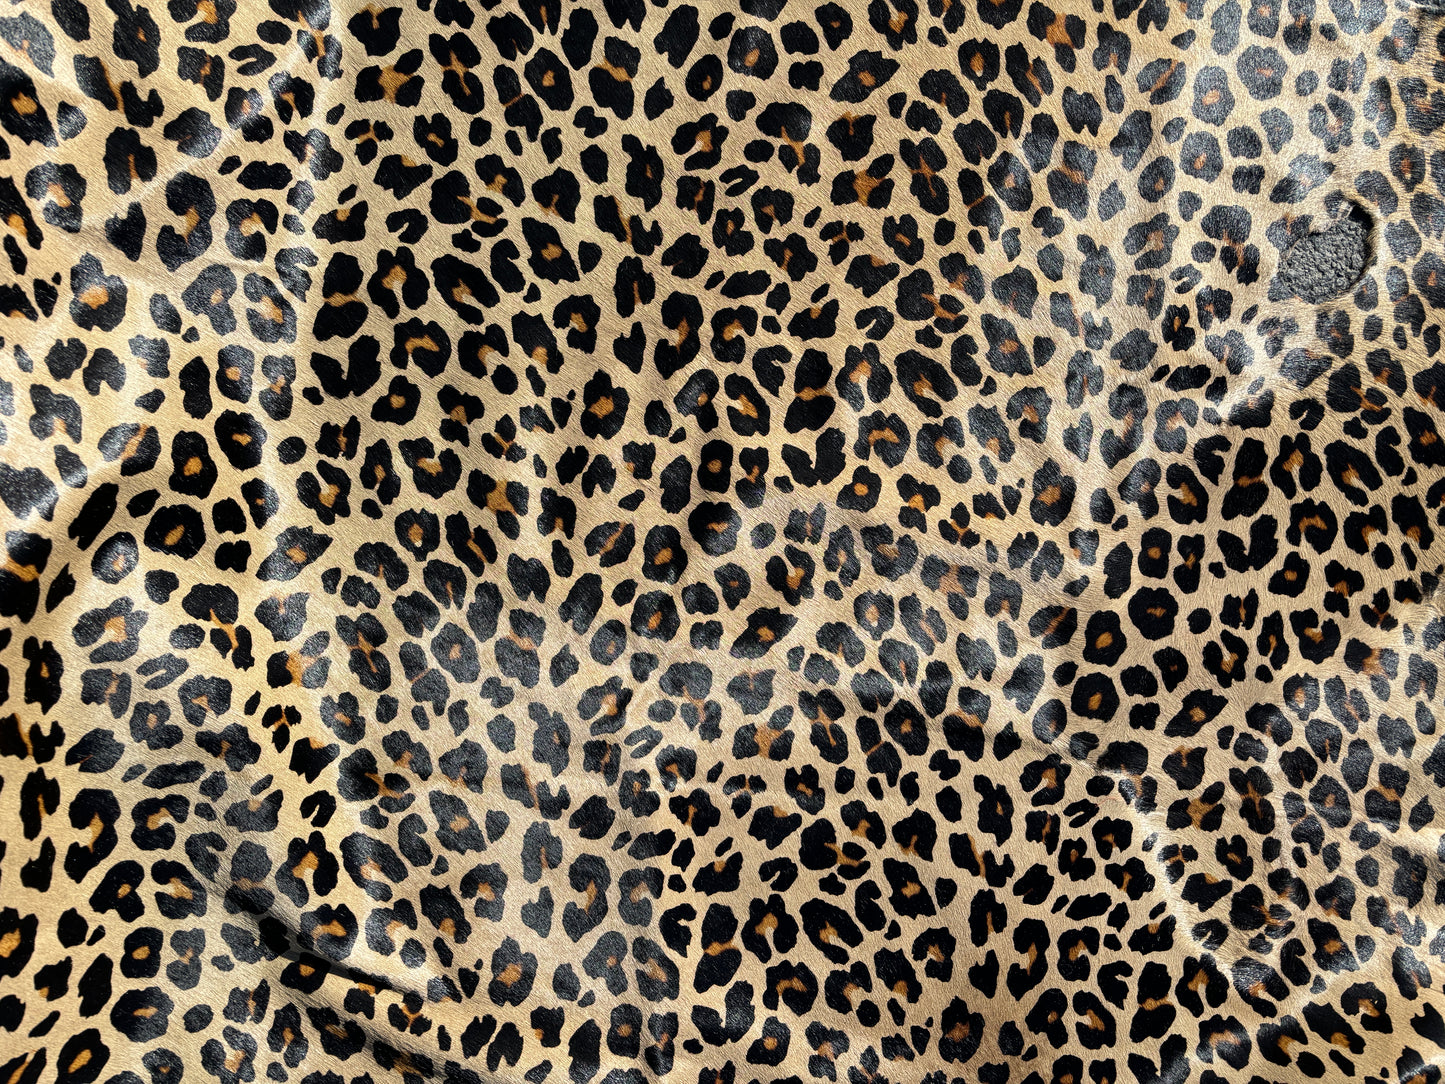 Cheetah Print Cowhide, High Quality Remnants Originally Used to make Purses